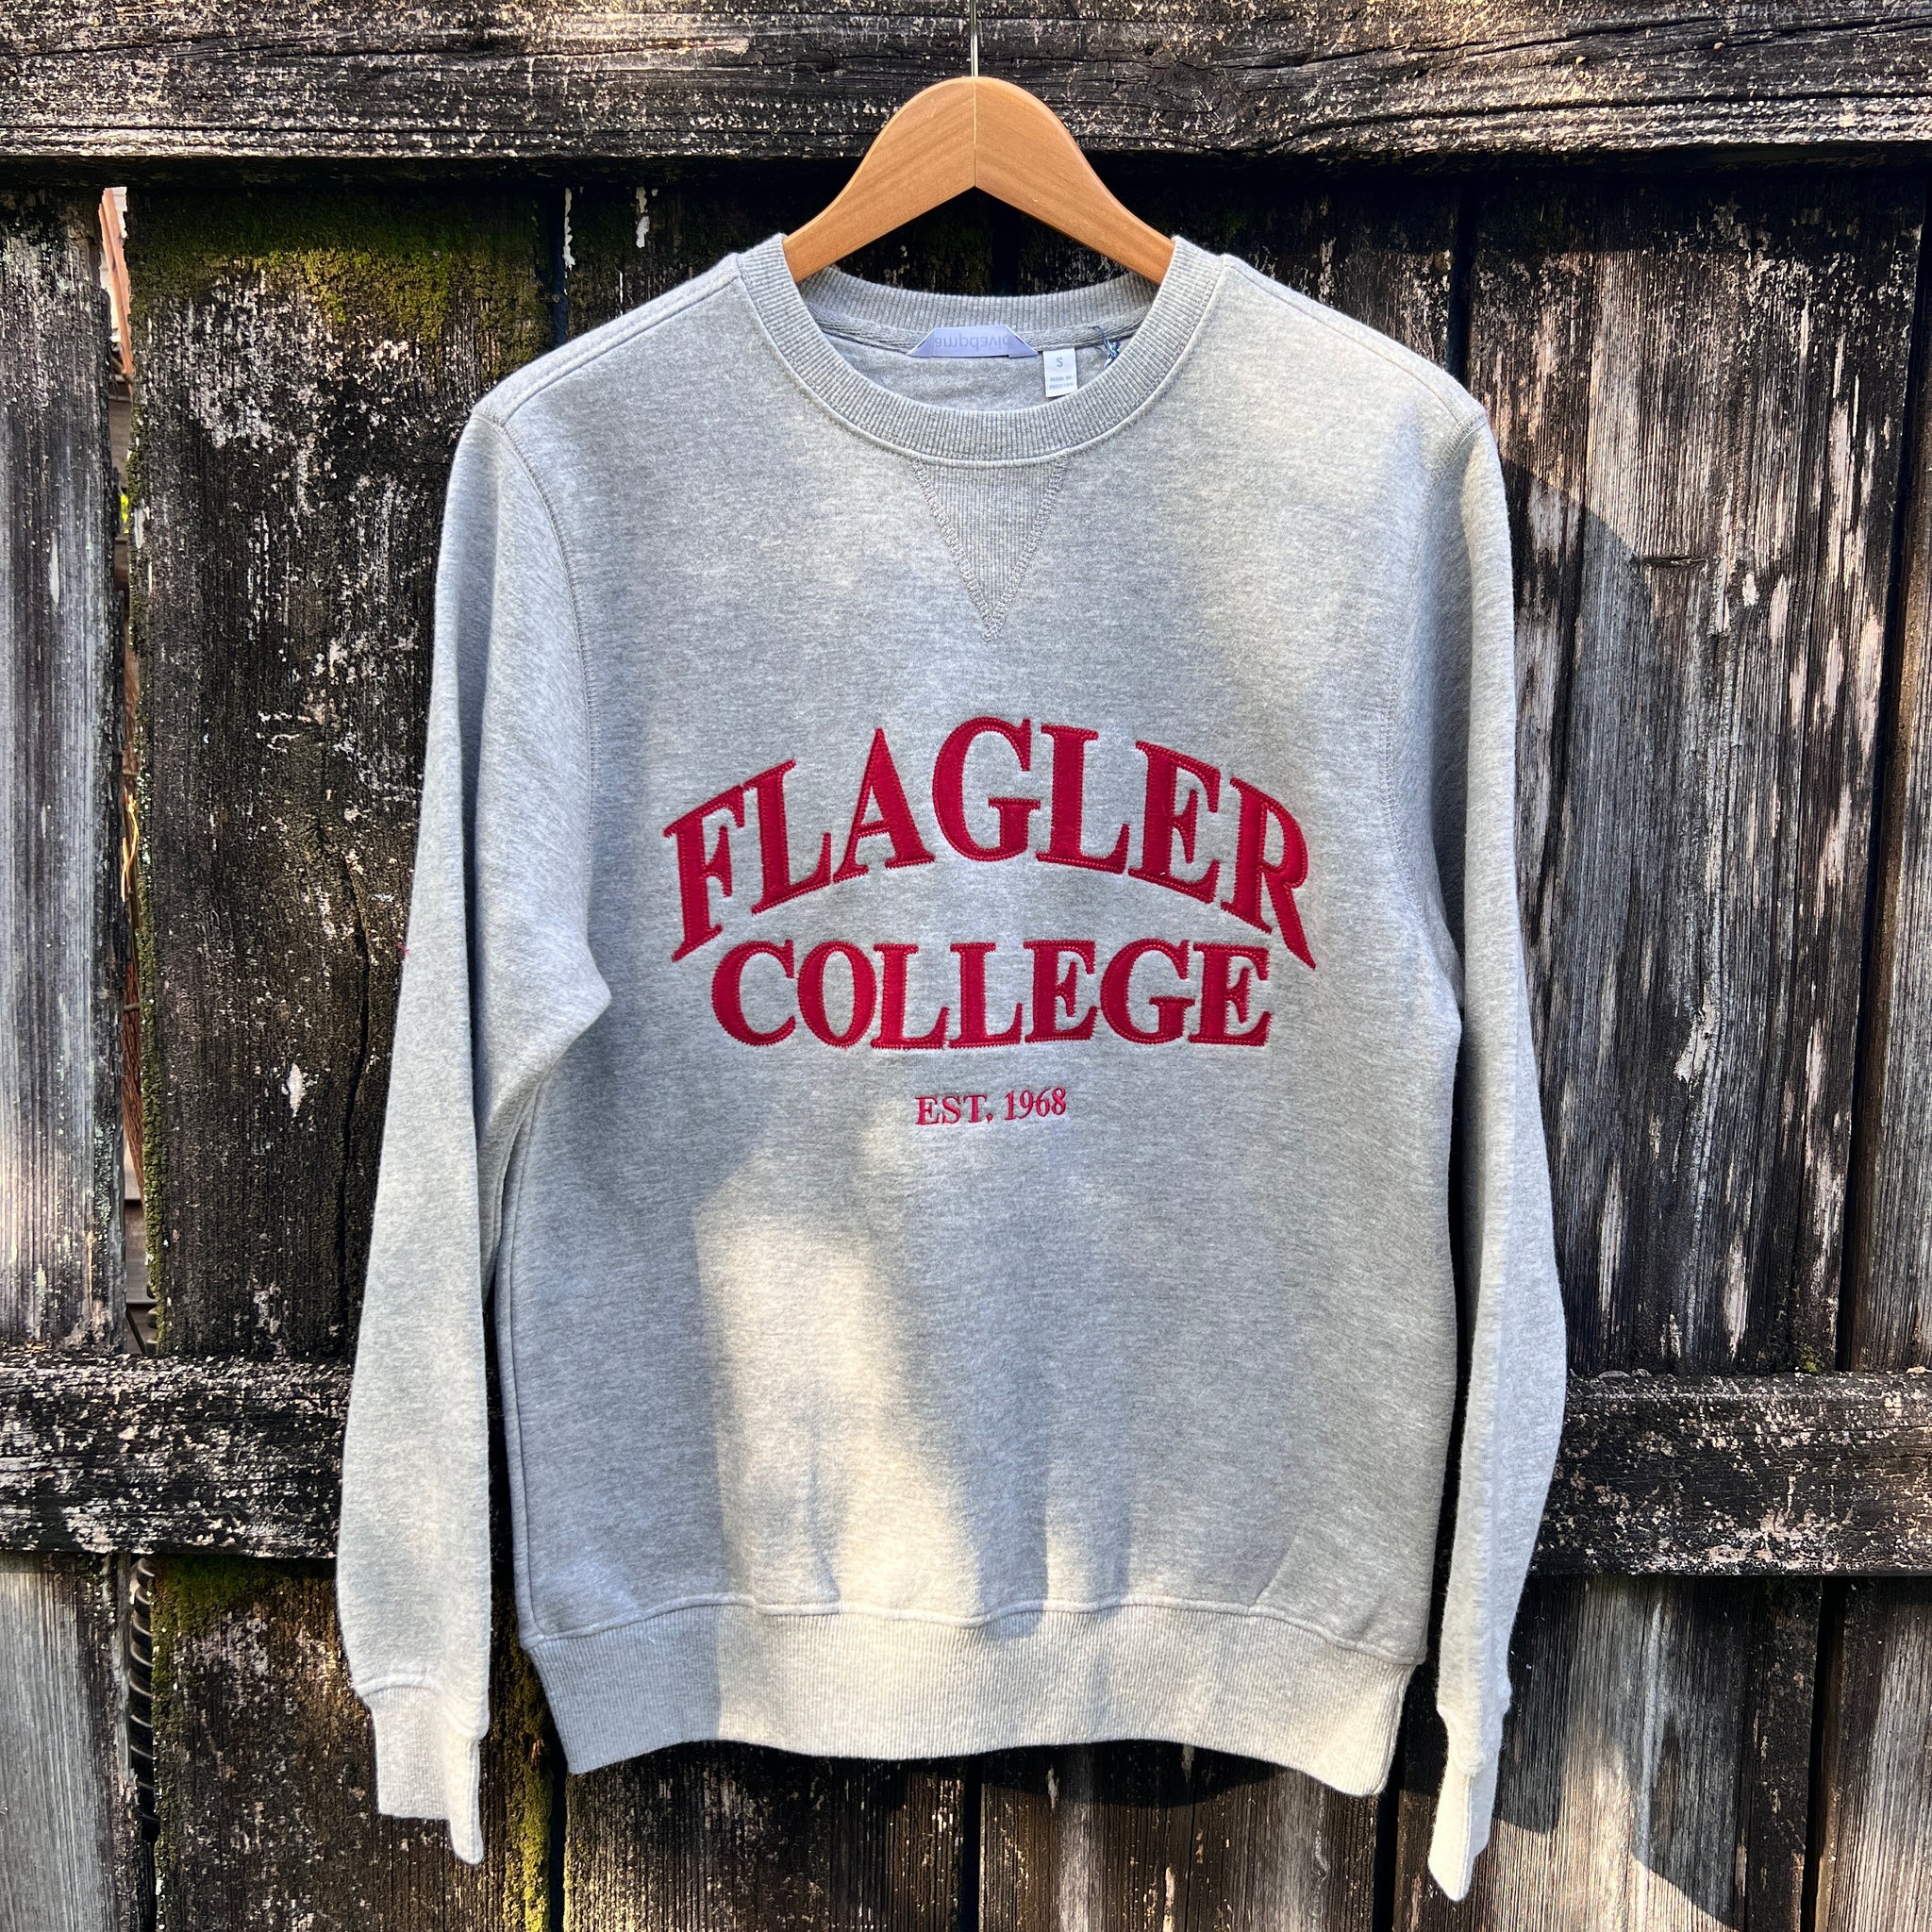 Grey solid longsleeve crewneck with crimson imprint in center saying Flagler over College over est 1968